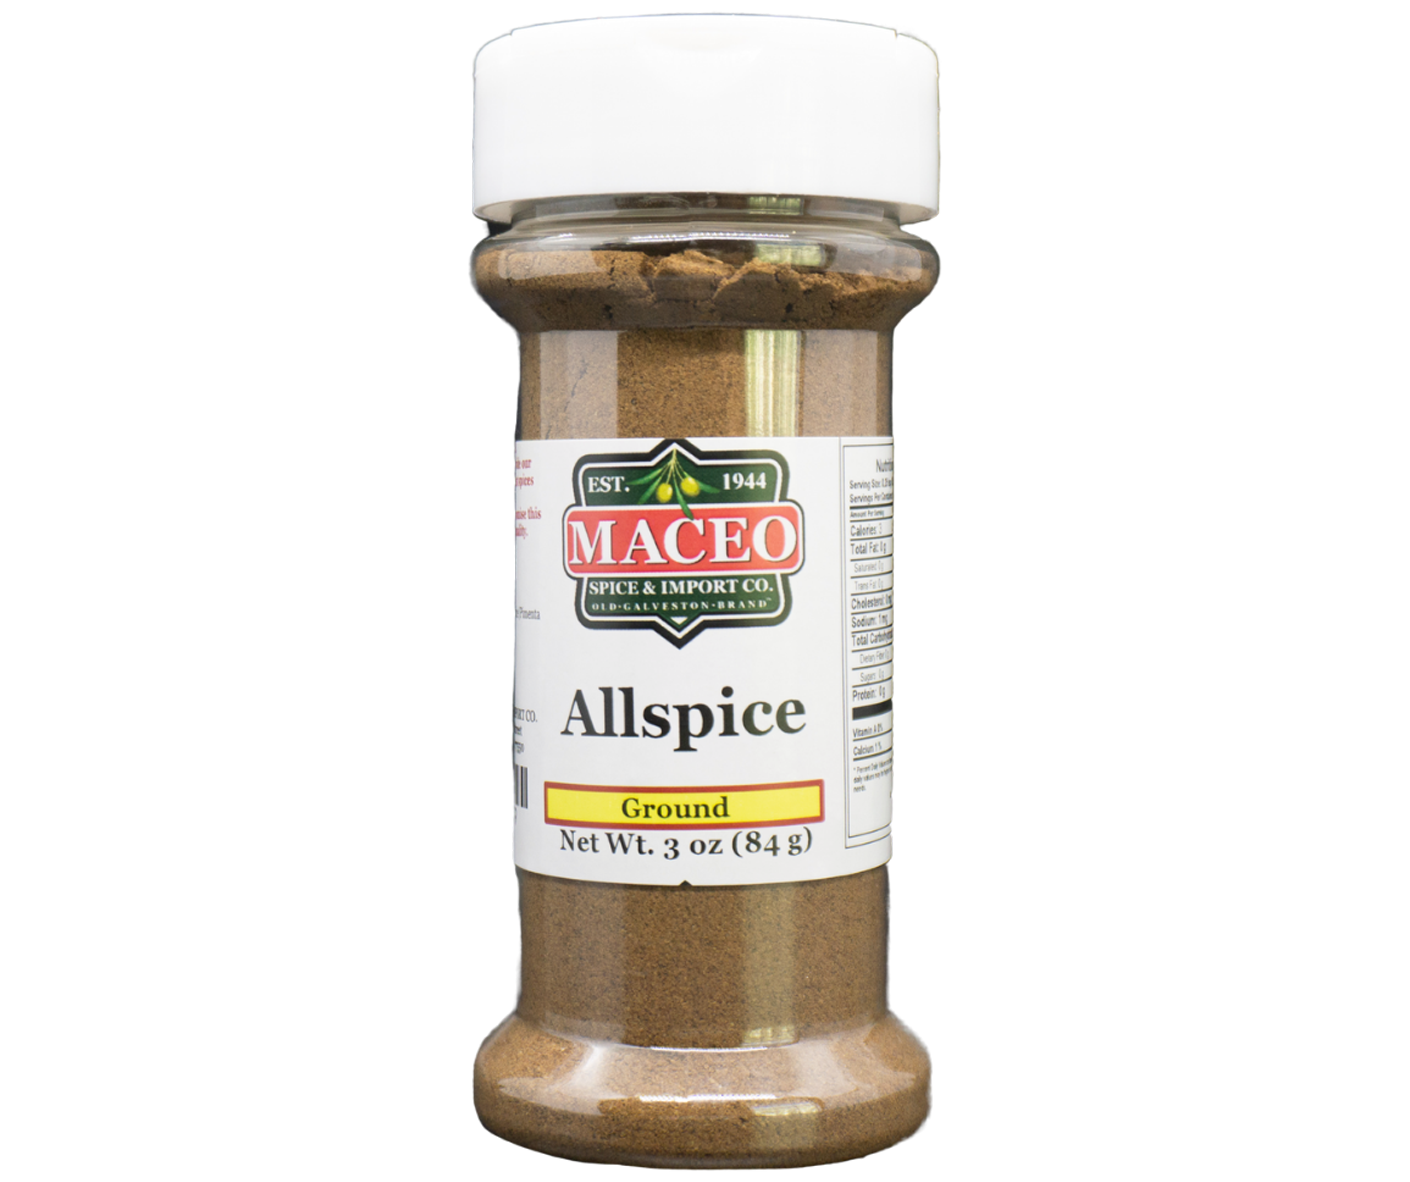 Allspice - Ground  Maceo Spice & Import Co.